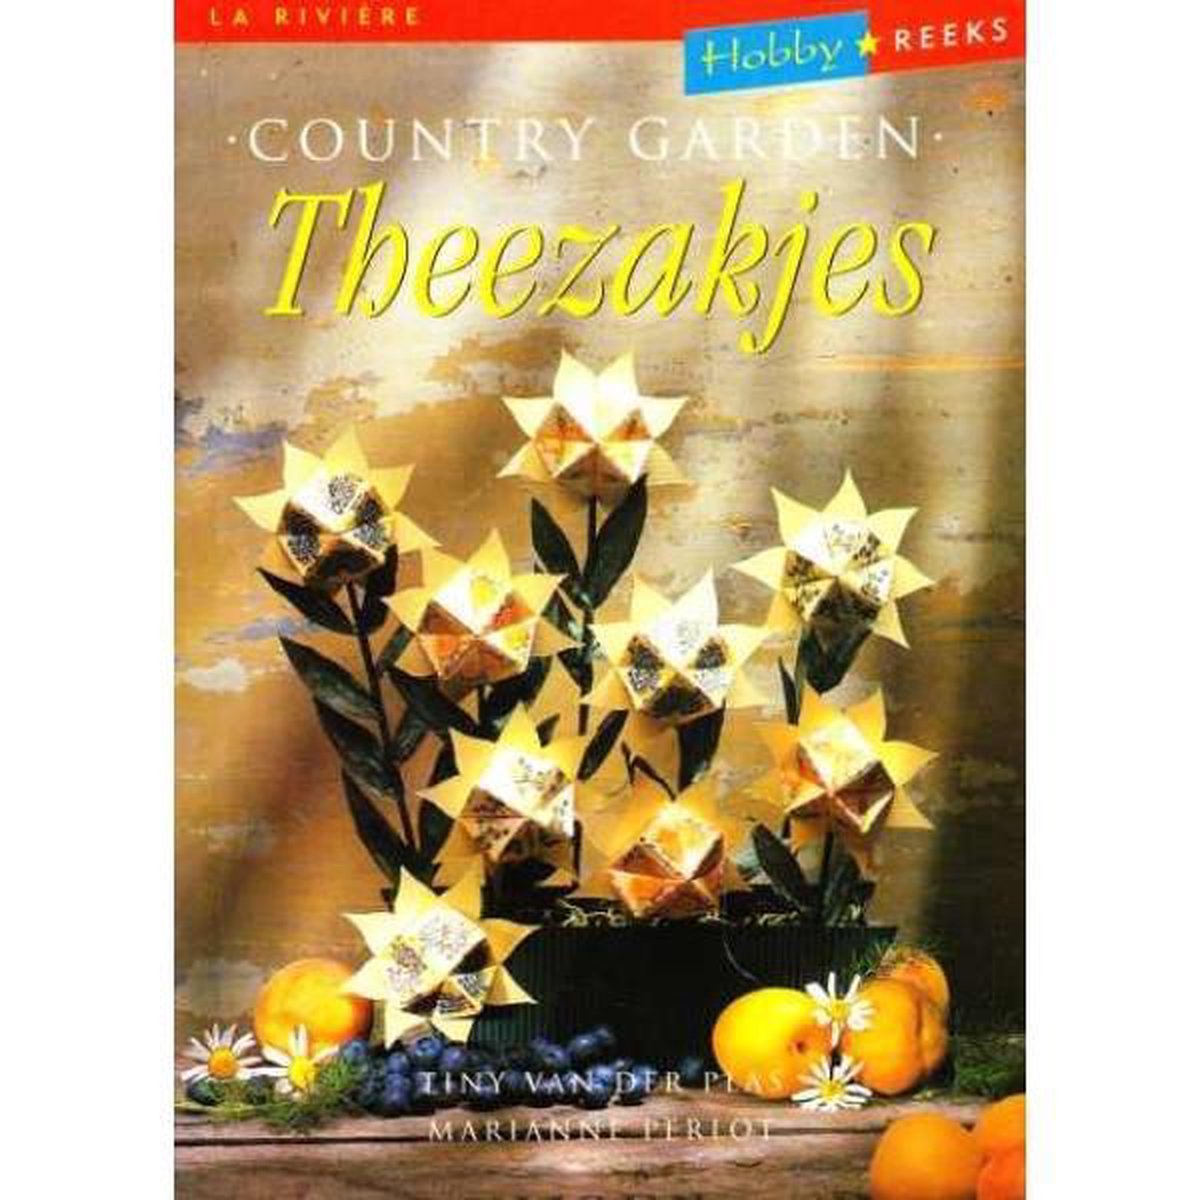 Country garden theezakjes / Hobbyreeks